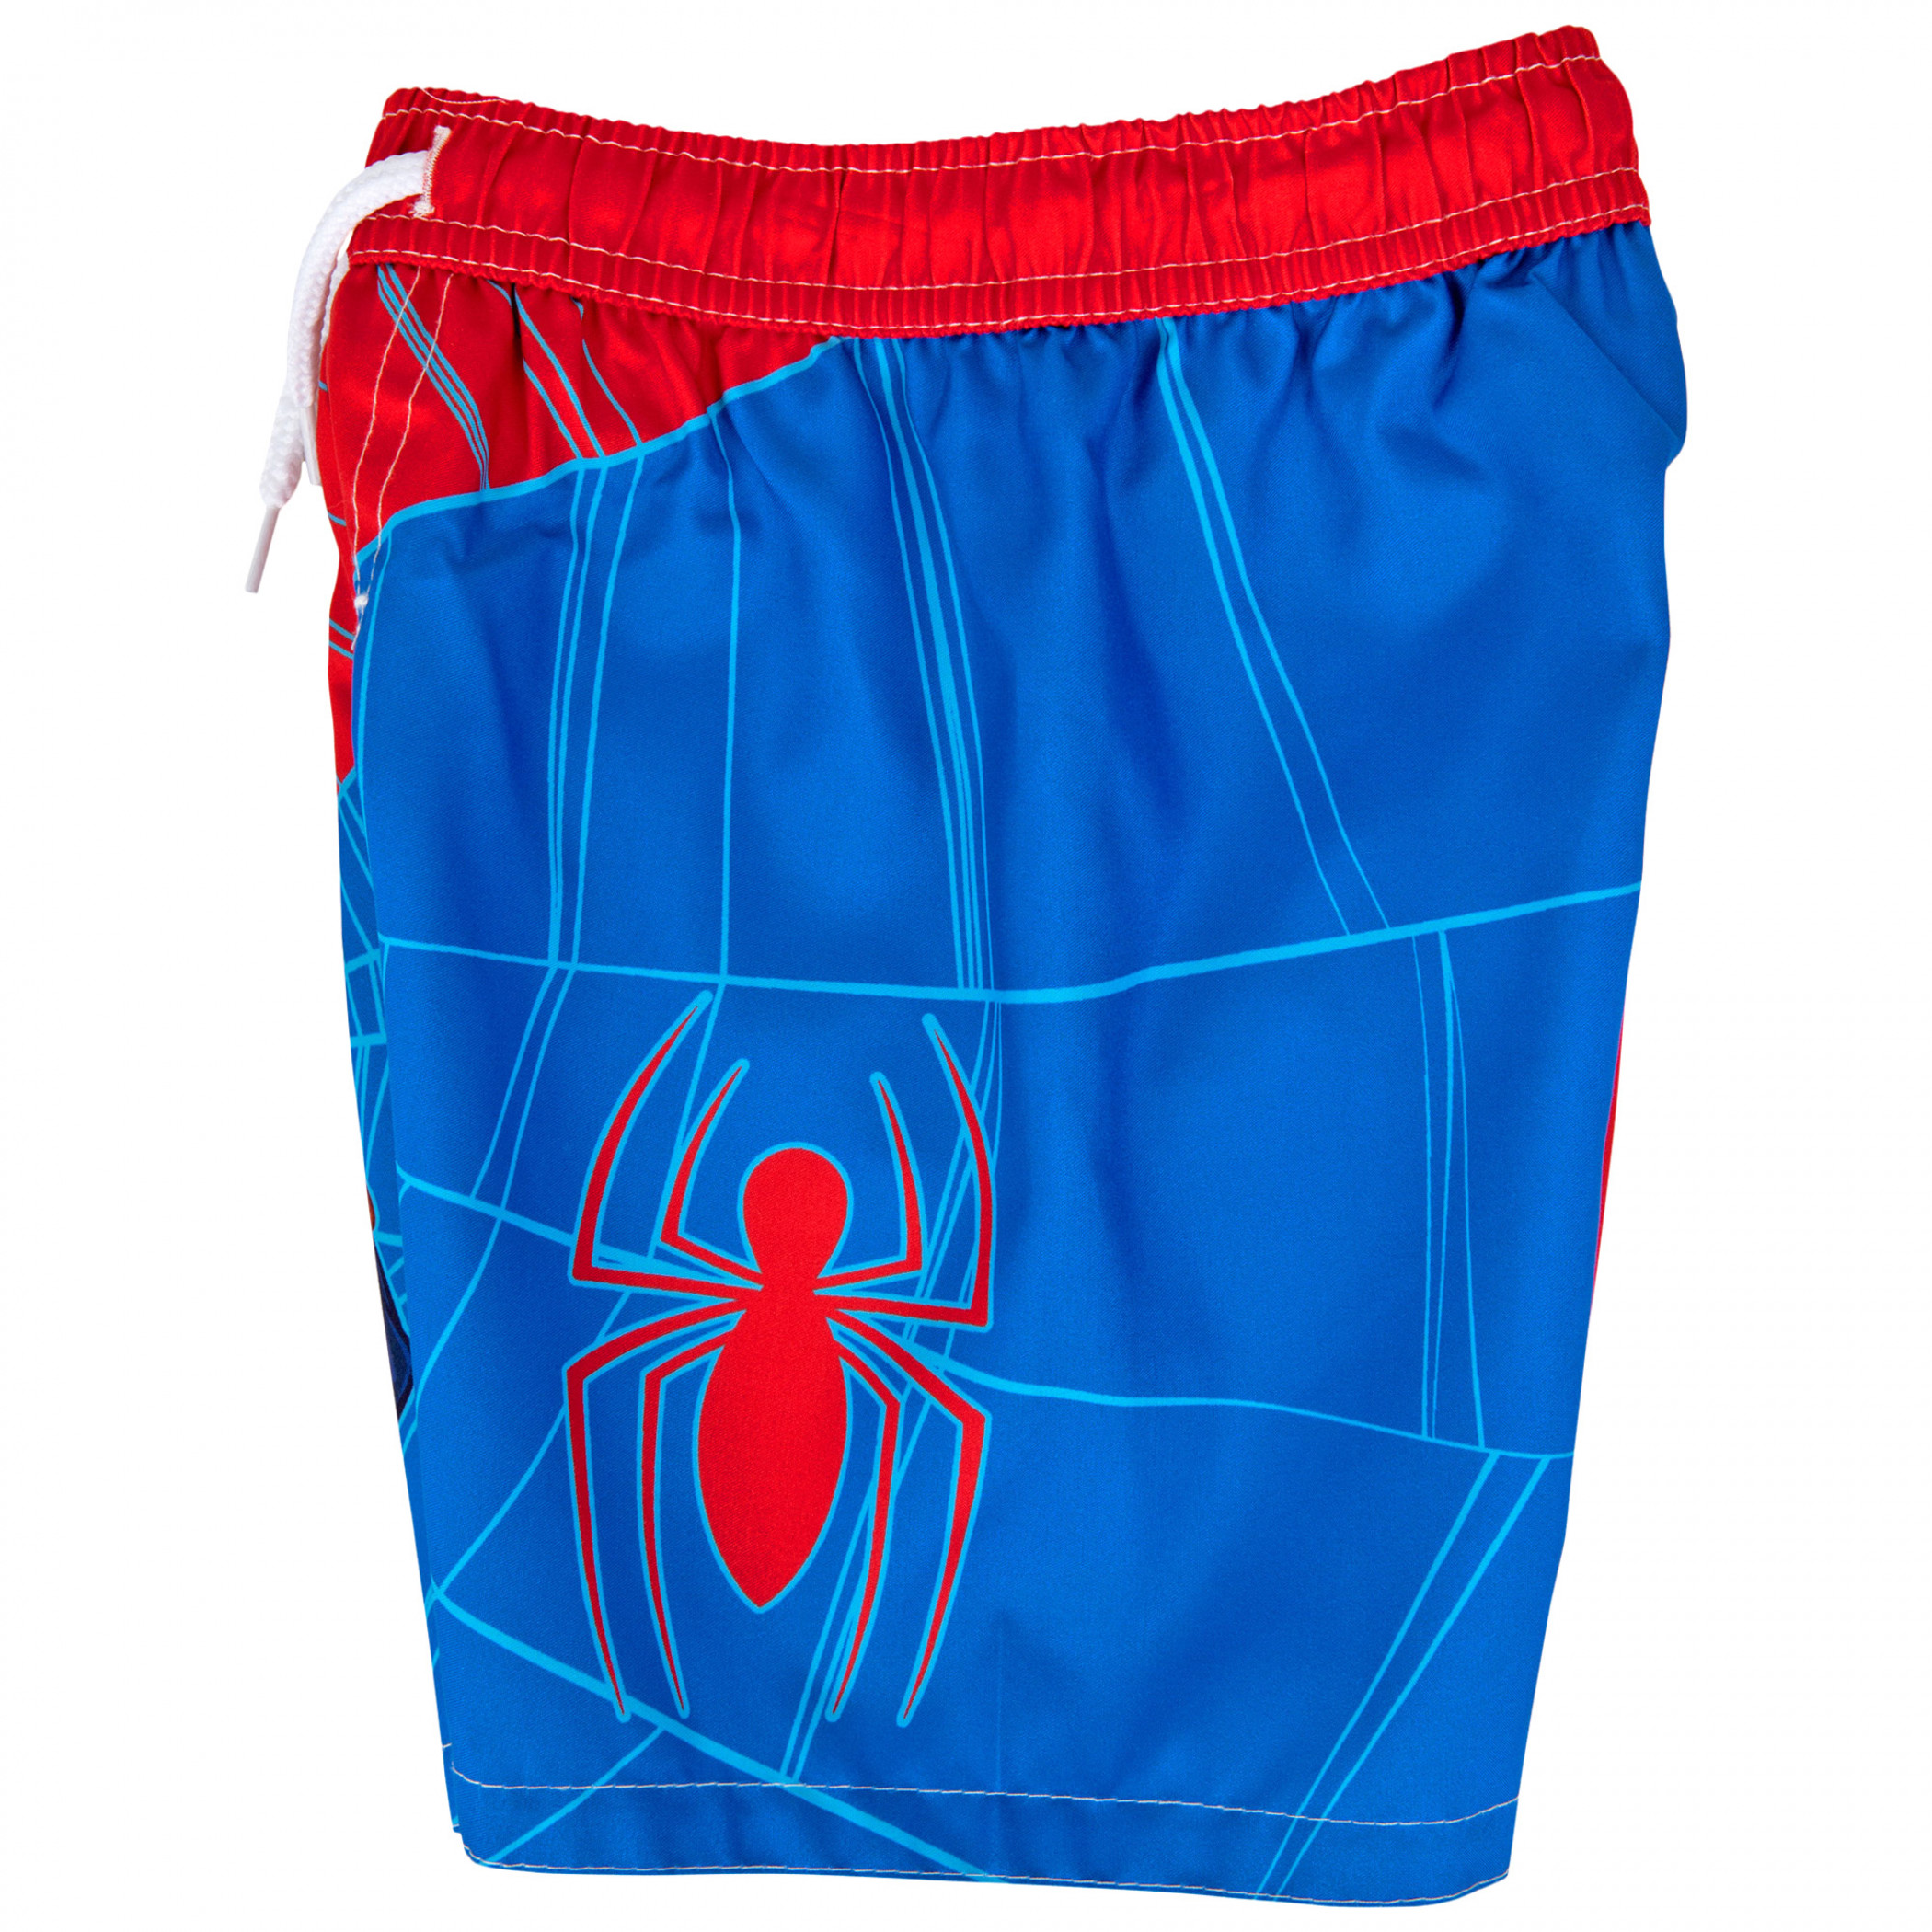 Spider-Man Character Webbing and Logo Toddler Swim Shorts